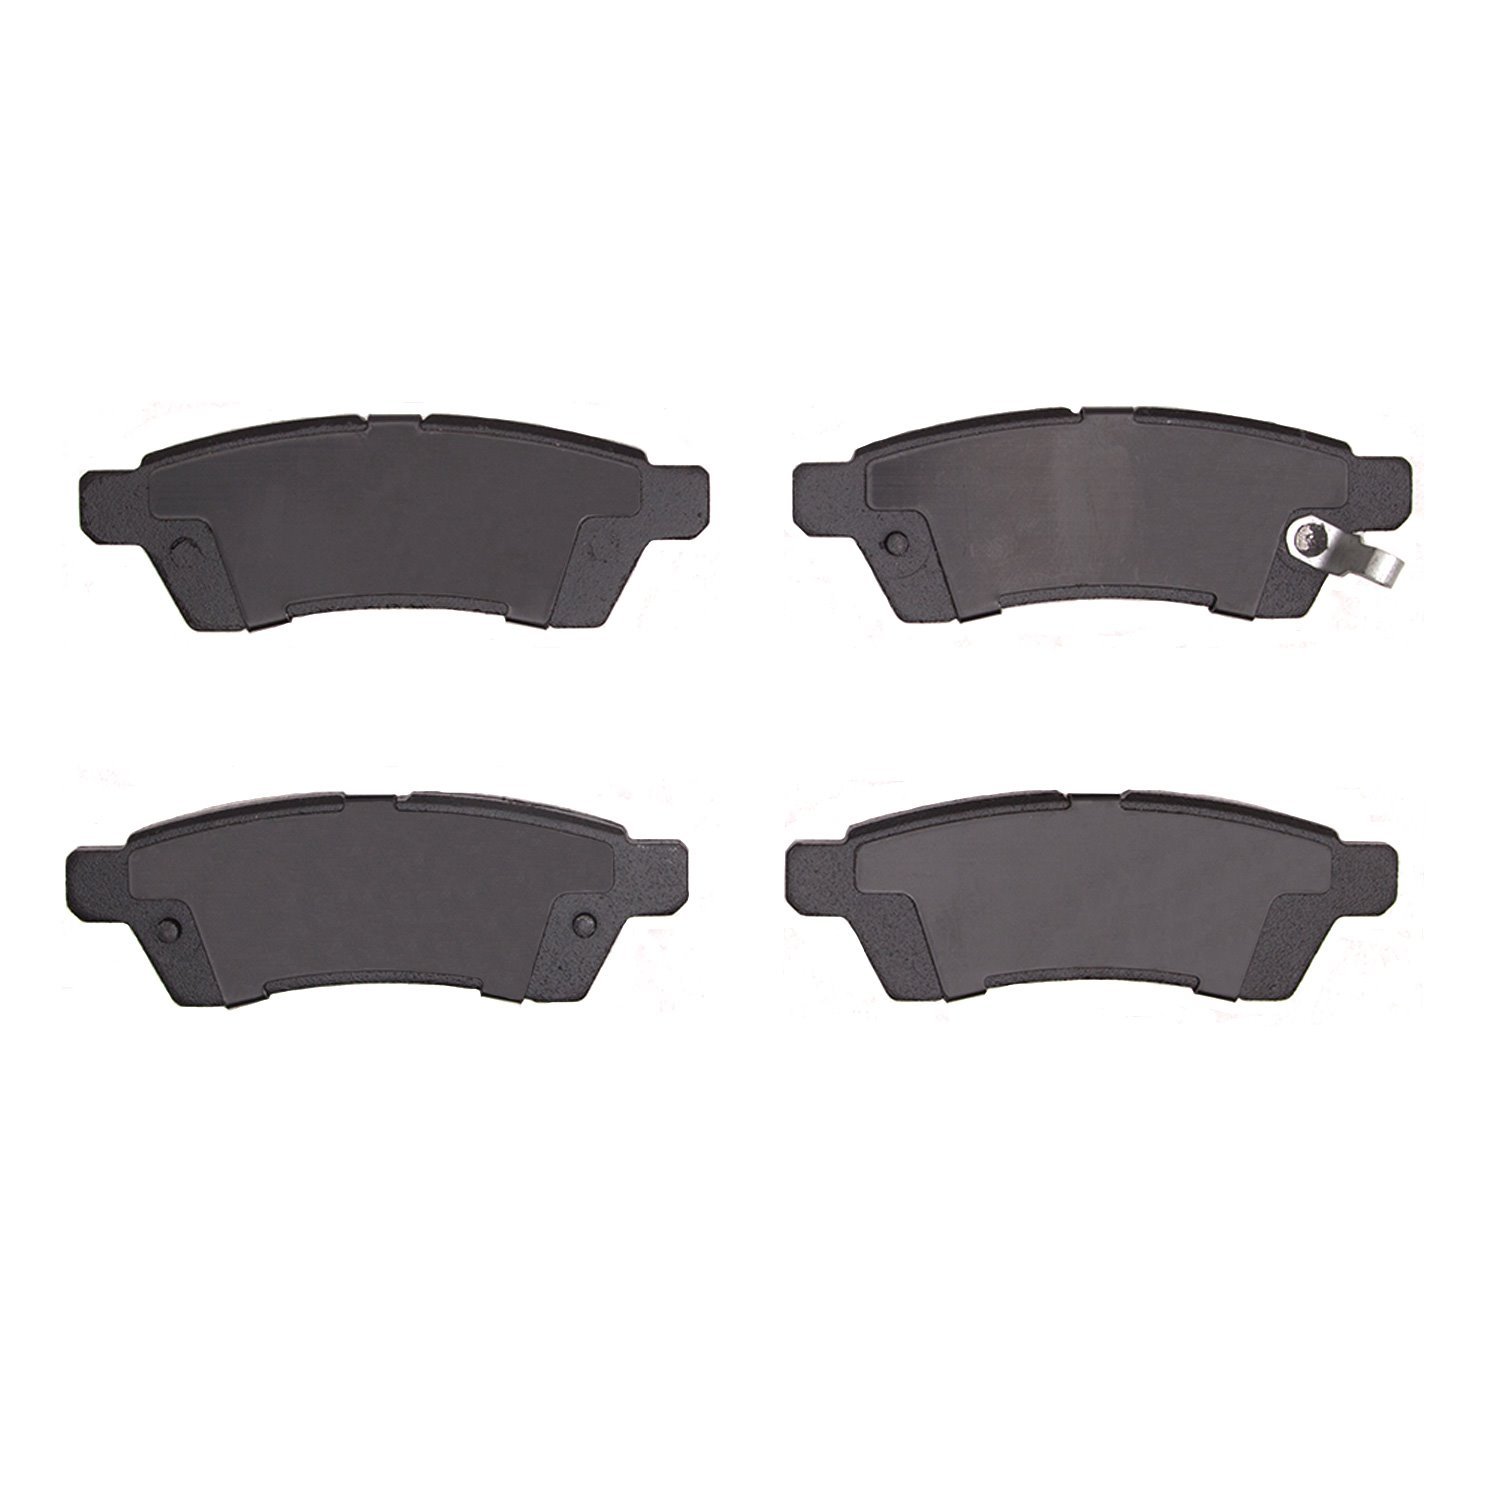 1310-1100-00 3000-Series Ceramic Brake Pads, Fits Select Multiple Makes/Models, Position: Rear